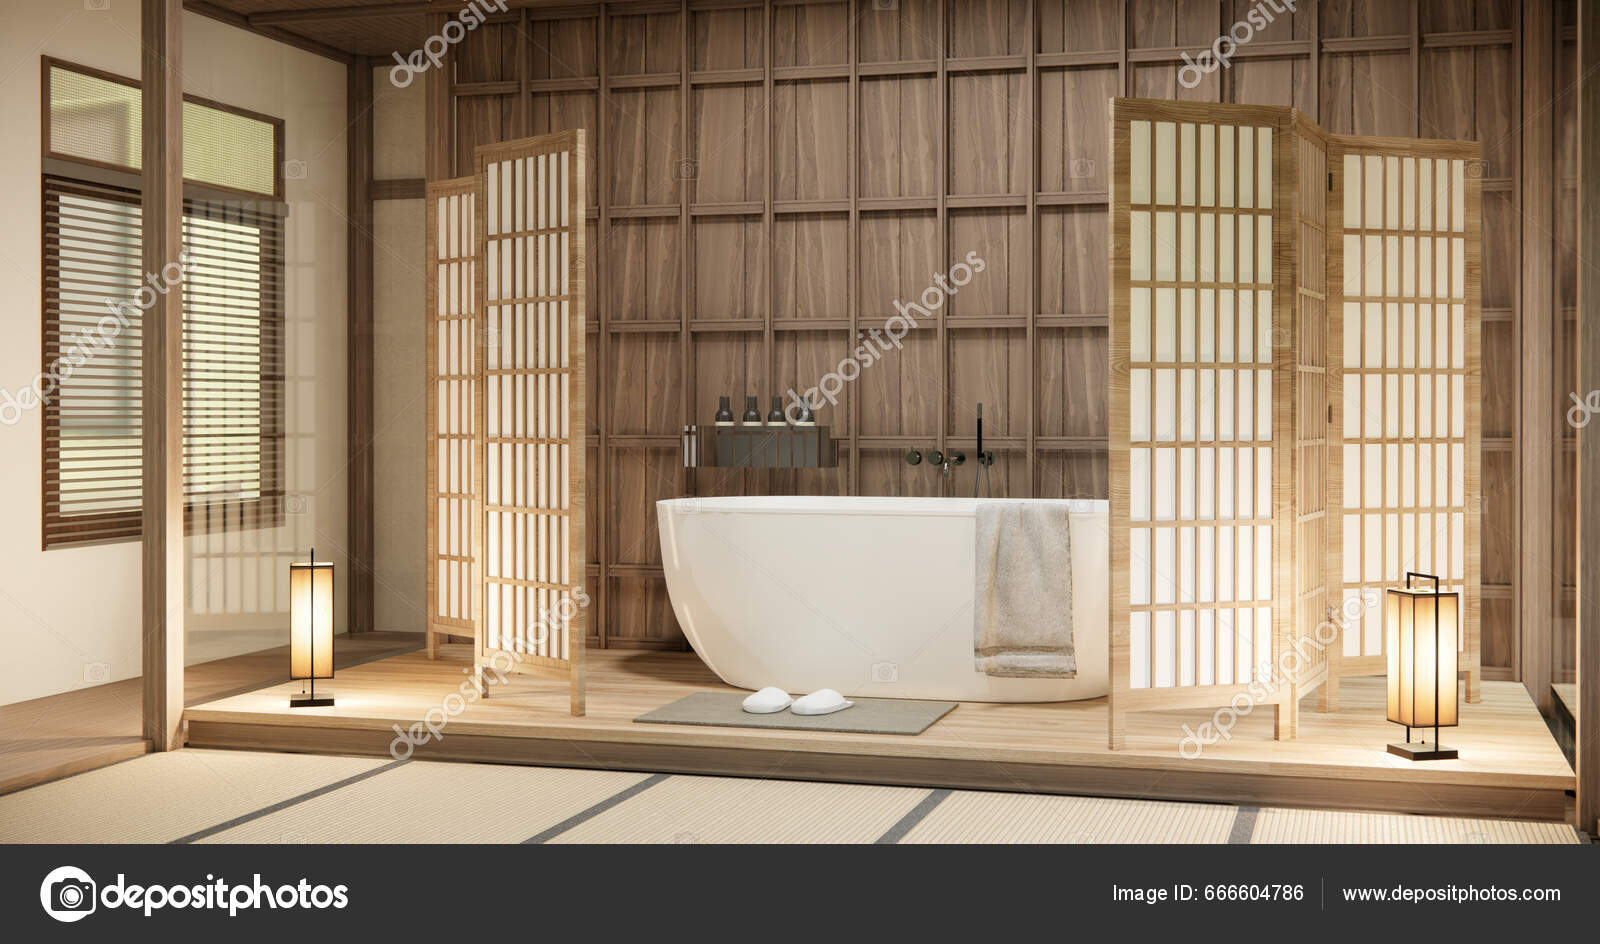 https://st5.depositphotos.com/26501280/66660/i/1600/depositphotos_666604786-stock-photo-bath-toilet-bathroom-japanese-wabi.jpg